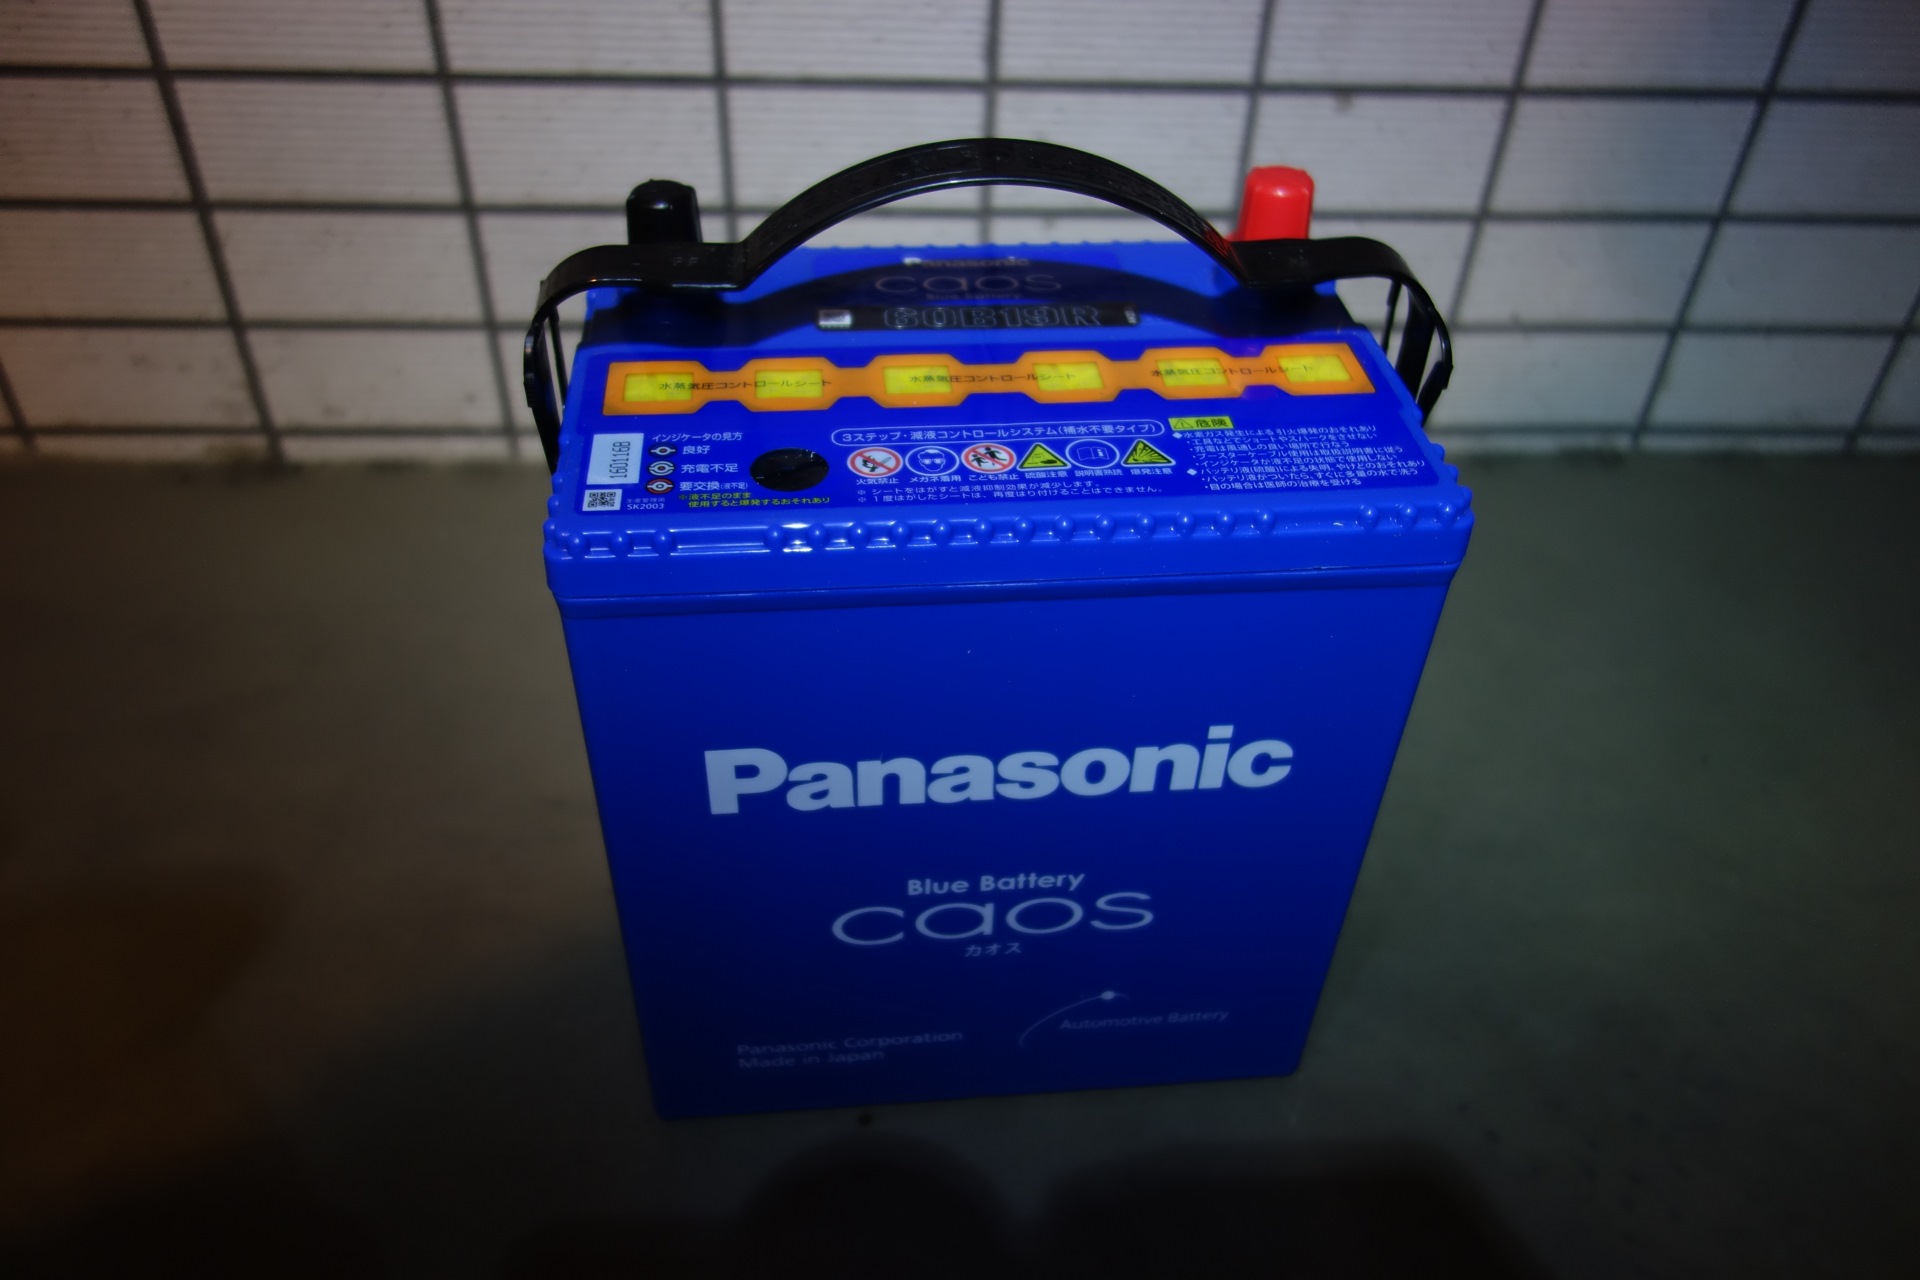 B 19 ru. Аккумулятор Панасоник caos 60b19l n. S65d26l Panasonic Blue Battery caos. Аккумулятор 40b19r Panasonic. Аккумулятор Панасоник caos Blue Battery 60b19l характеристики.